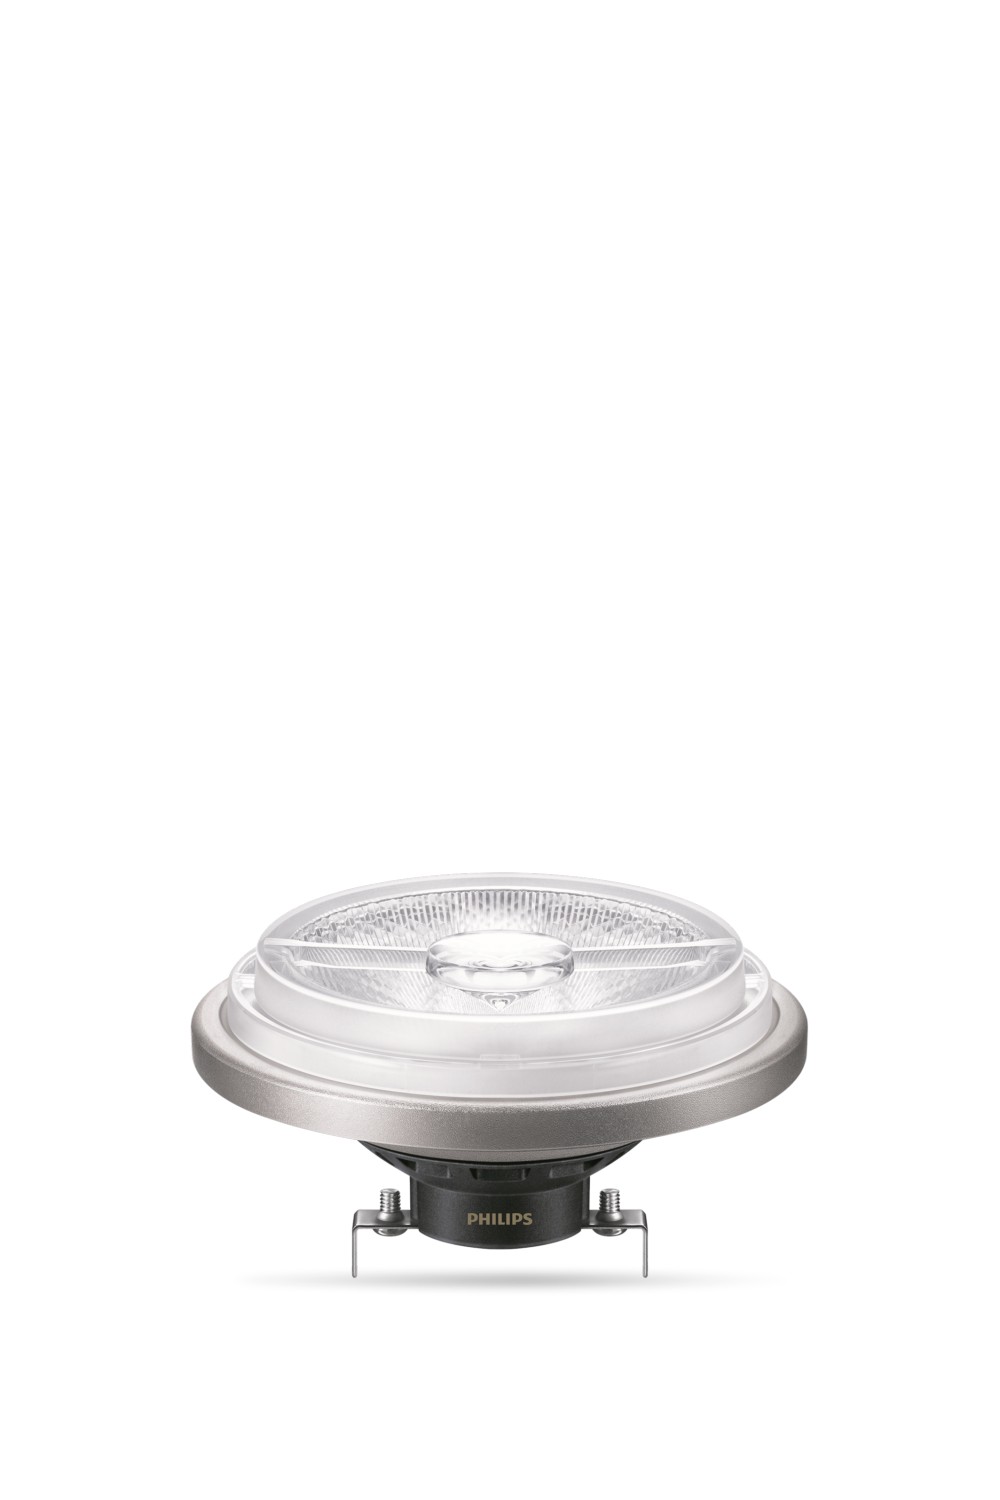 Philips LED Reflektorlampe AR111 ExpertColor 20 Watt 927 45 Grad